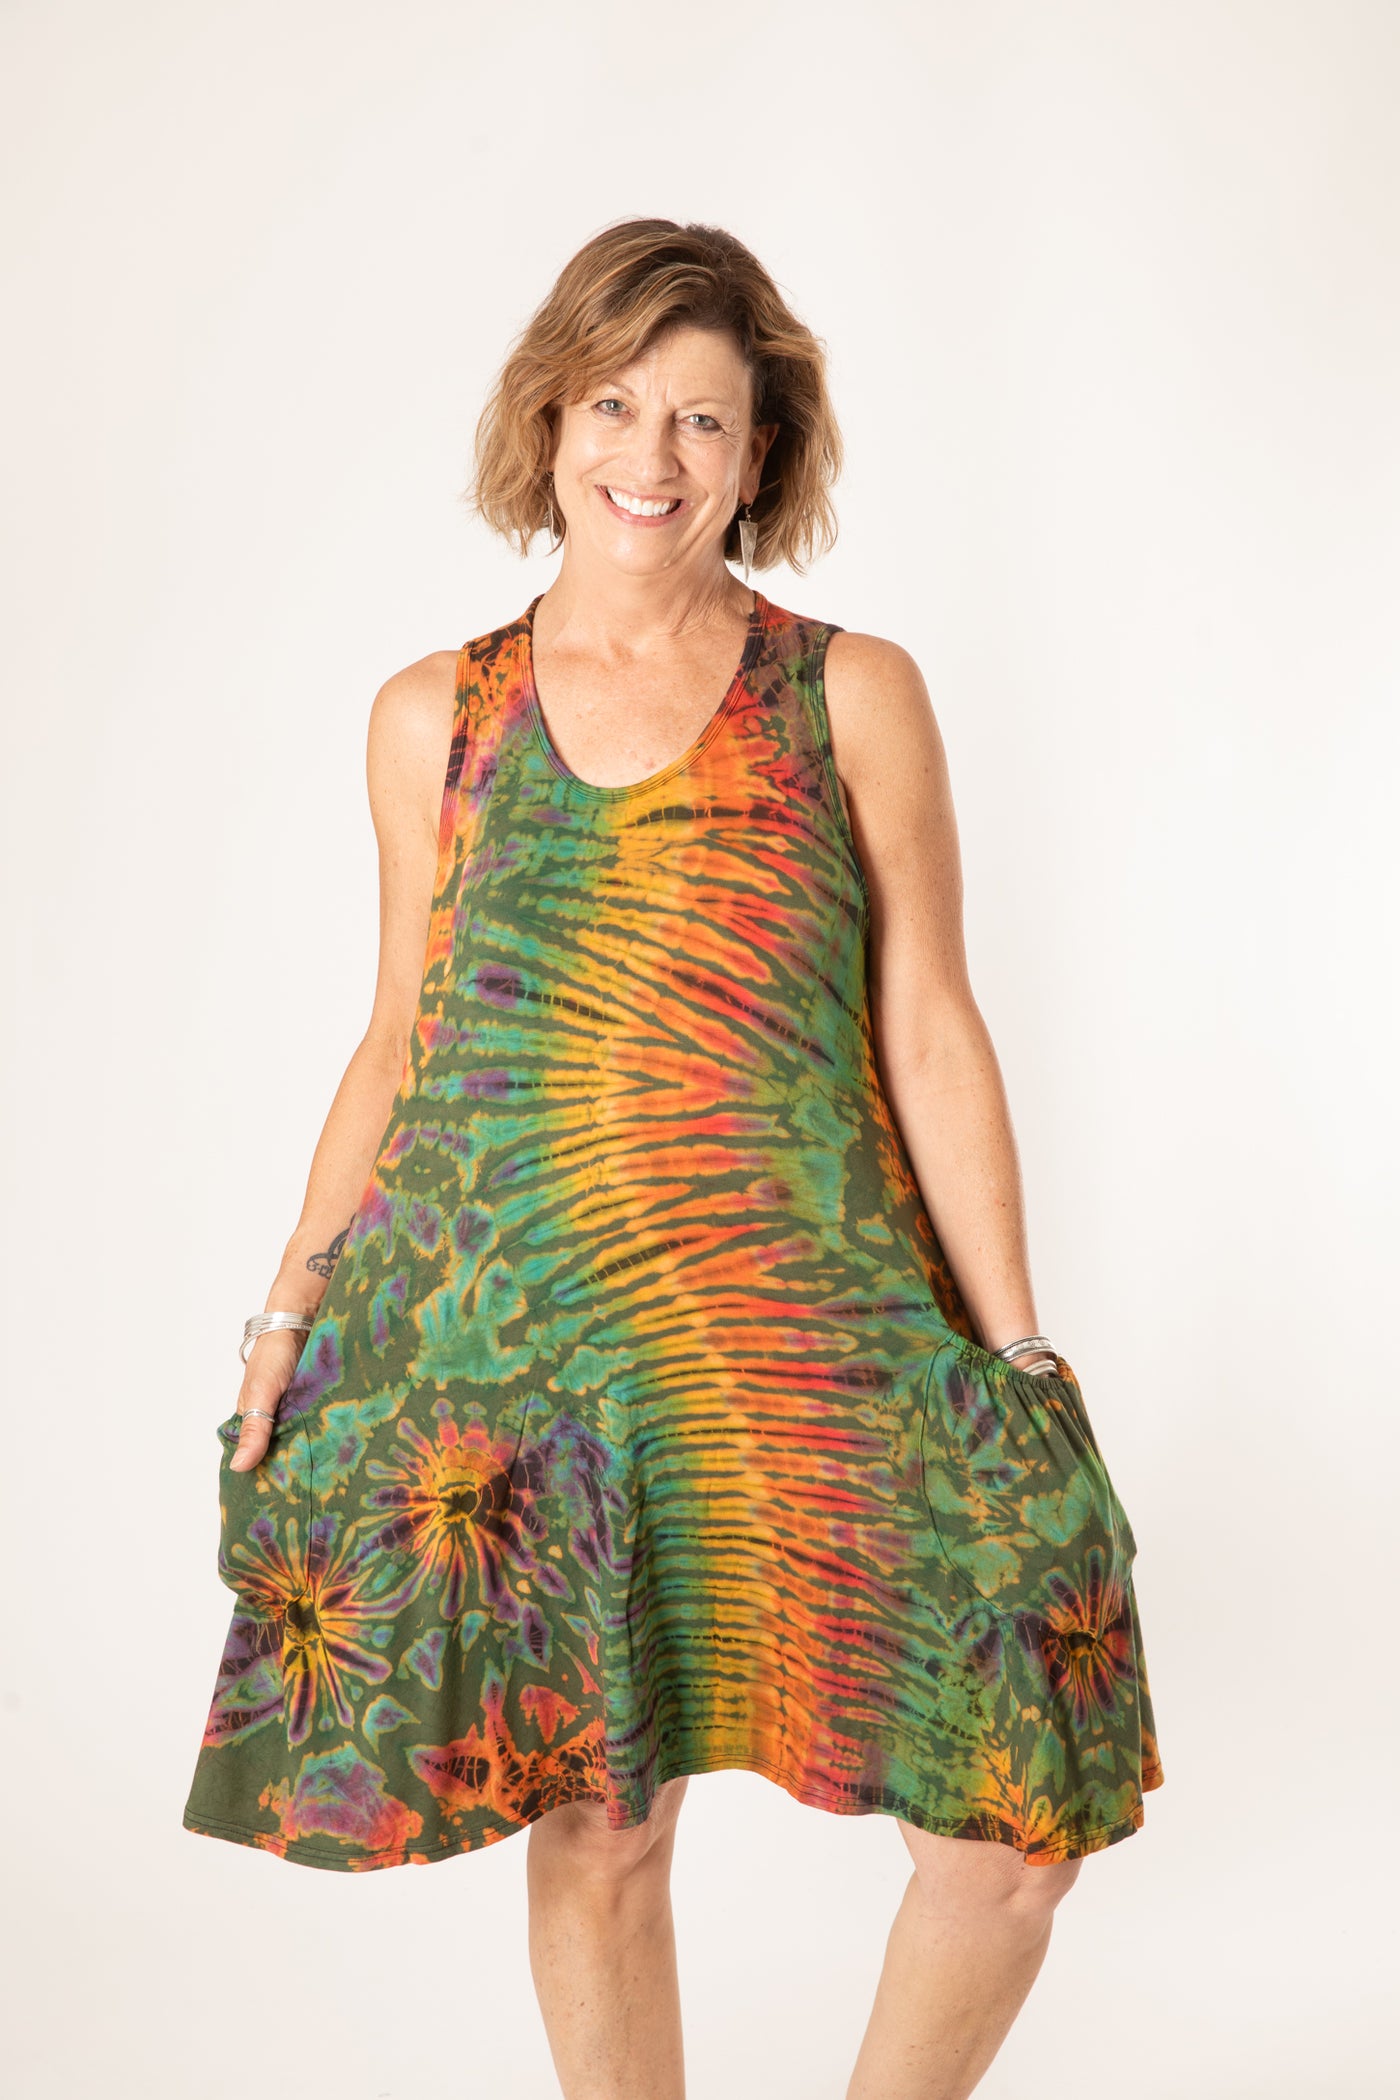 Althea Mudmee Tie Dye Tank Dress